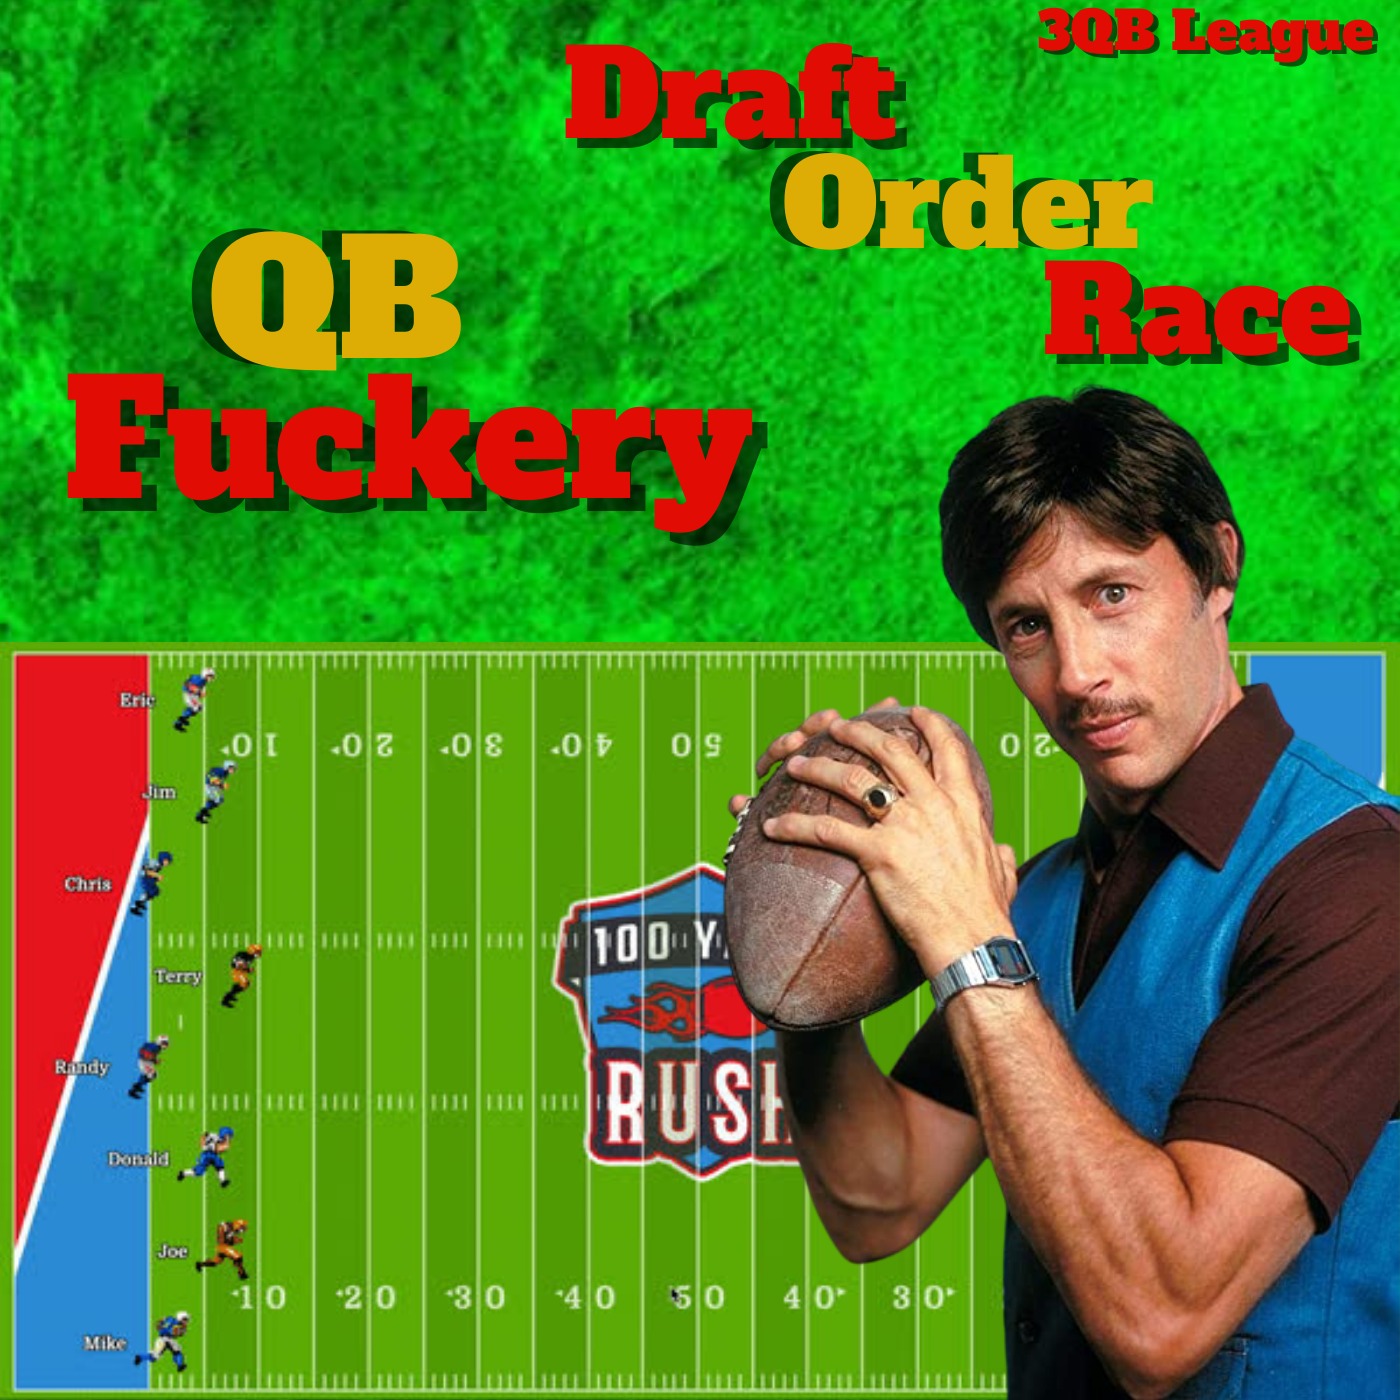 QB Fuckery League Draft Order Race, 3QB League Image